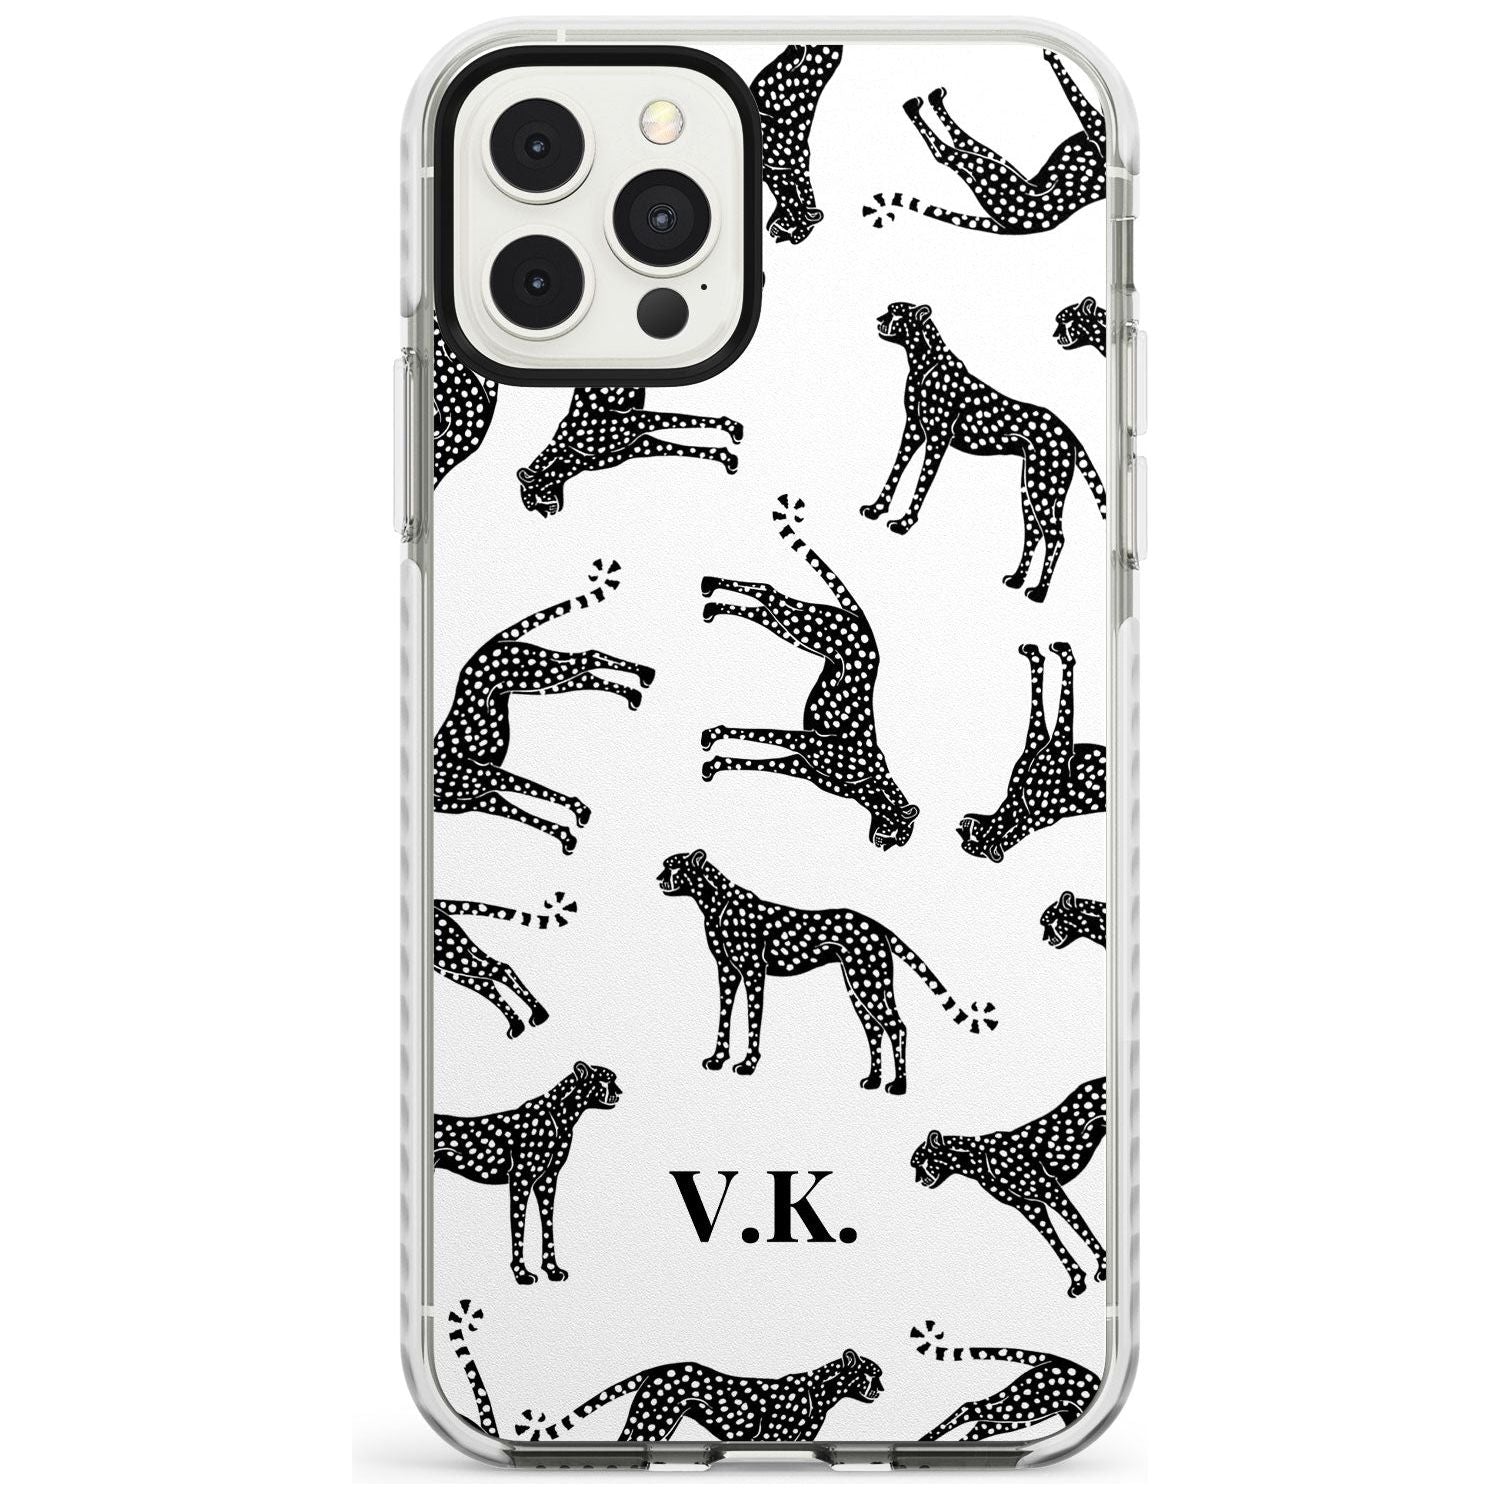 Personalised Cheetah Pattern: Black & White Slim TPU Phone Case for iPhone 11 Pro Max